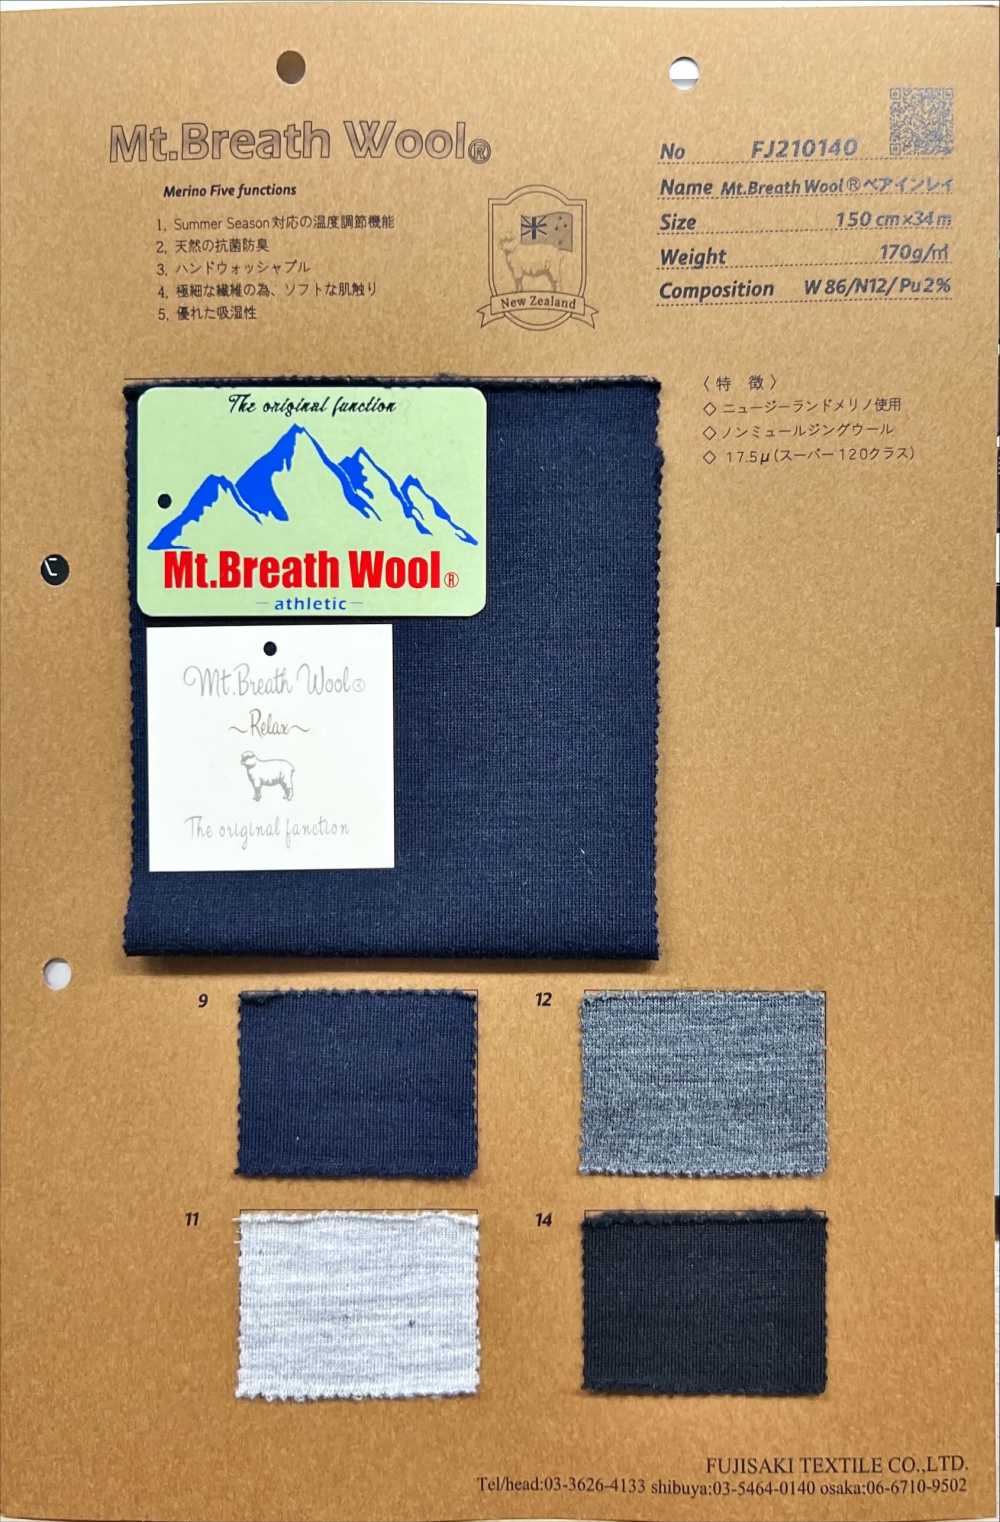 FJ210140 Mt.Breath Wool 베어 인레이[원단] Fujisaki Textile